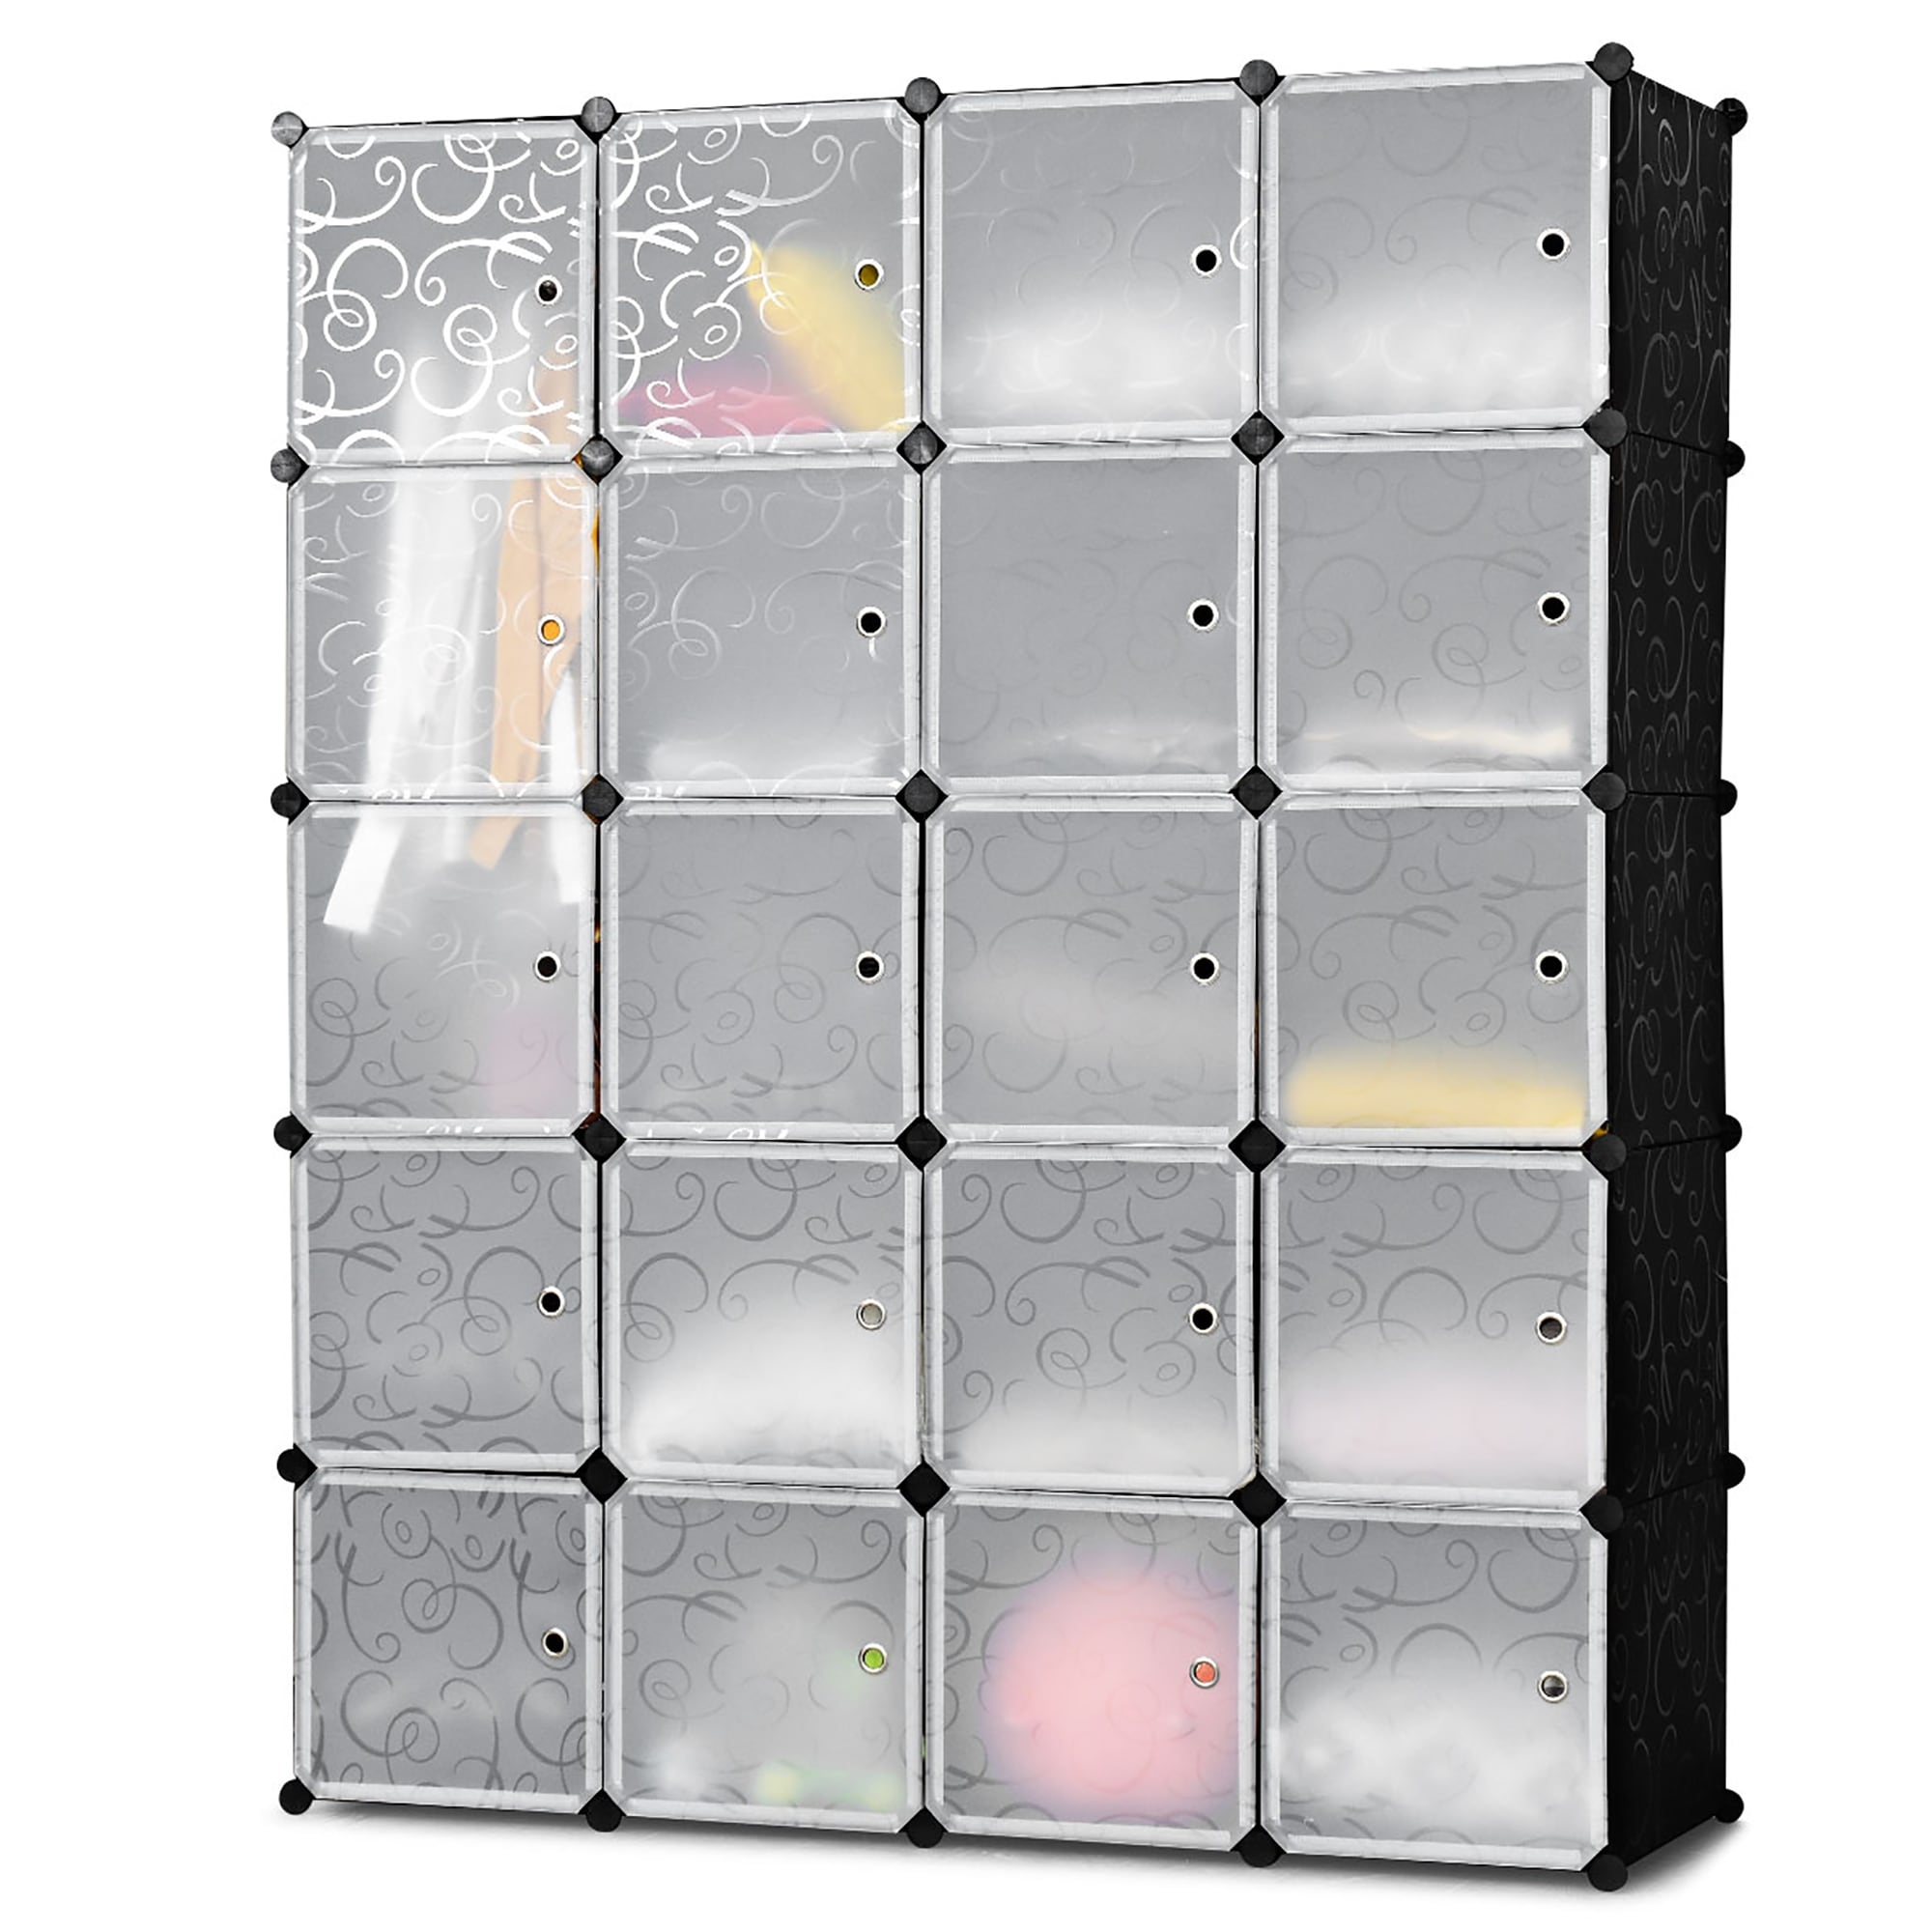 Details about   DIY 20-Cube Portable Storage Organizer Closet Shelves Cabinet Bookcase W/ Doors 